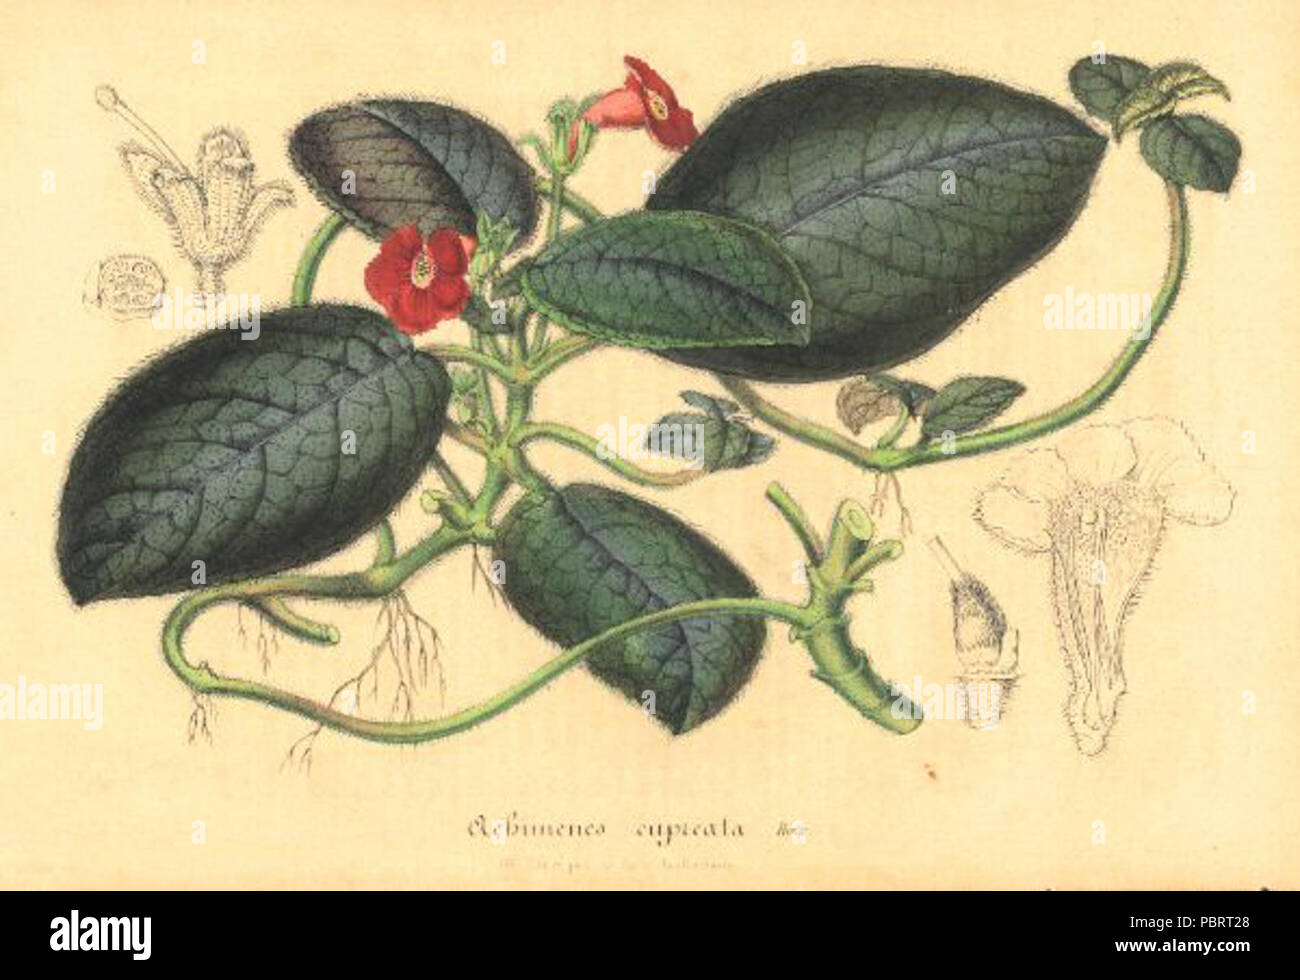 Achimenes cupreata van houtte 1847. Stock Photo